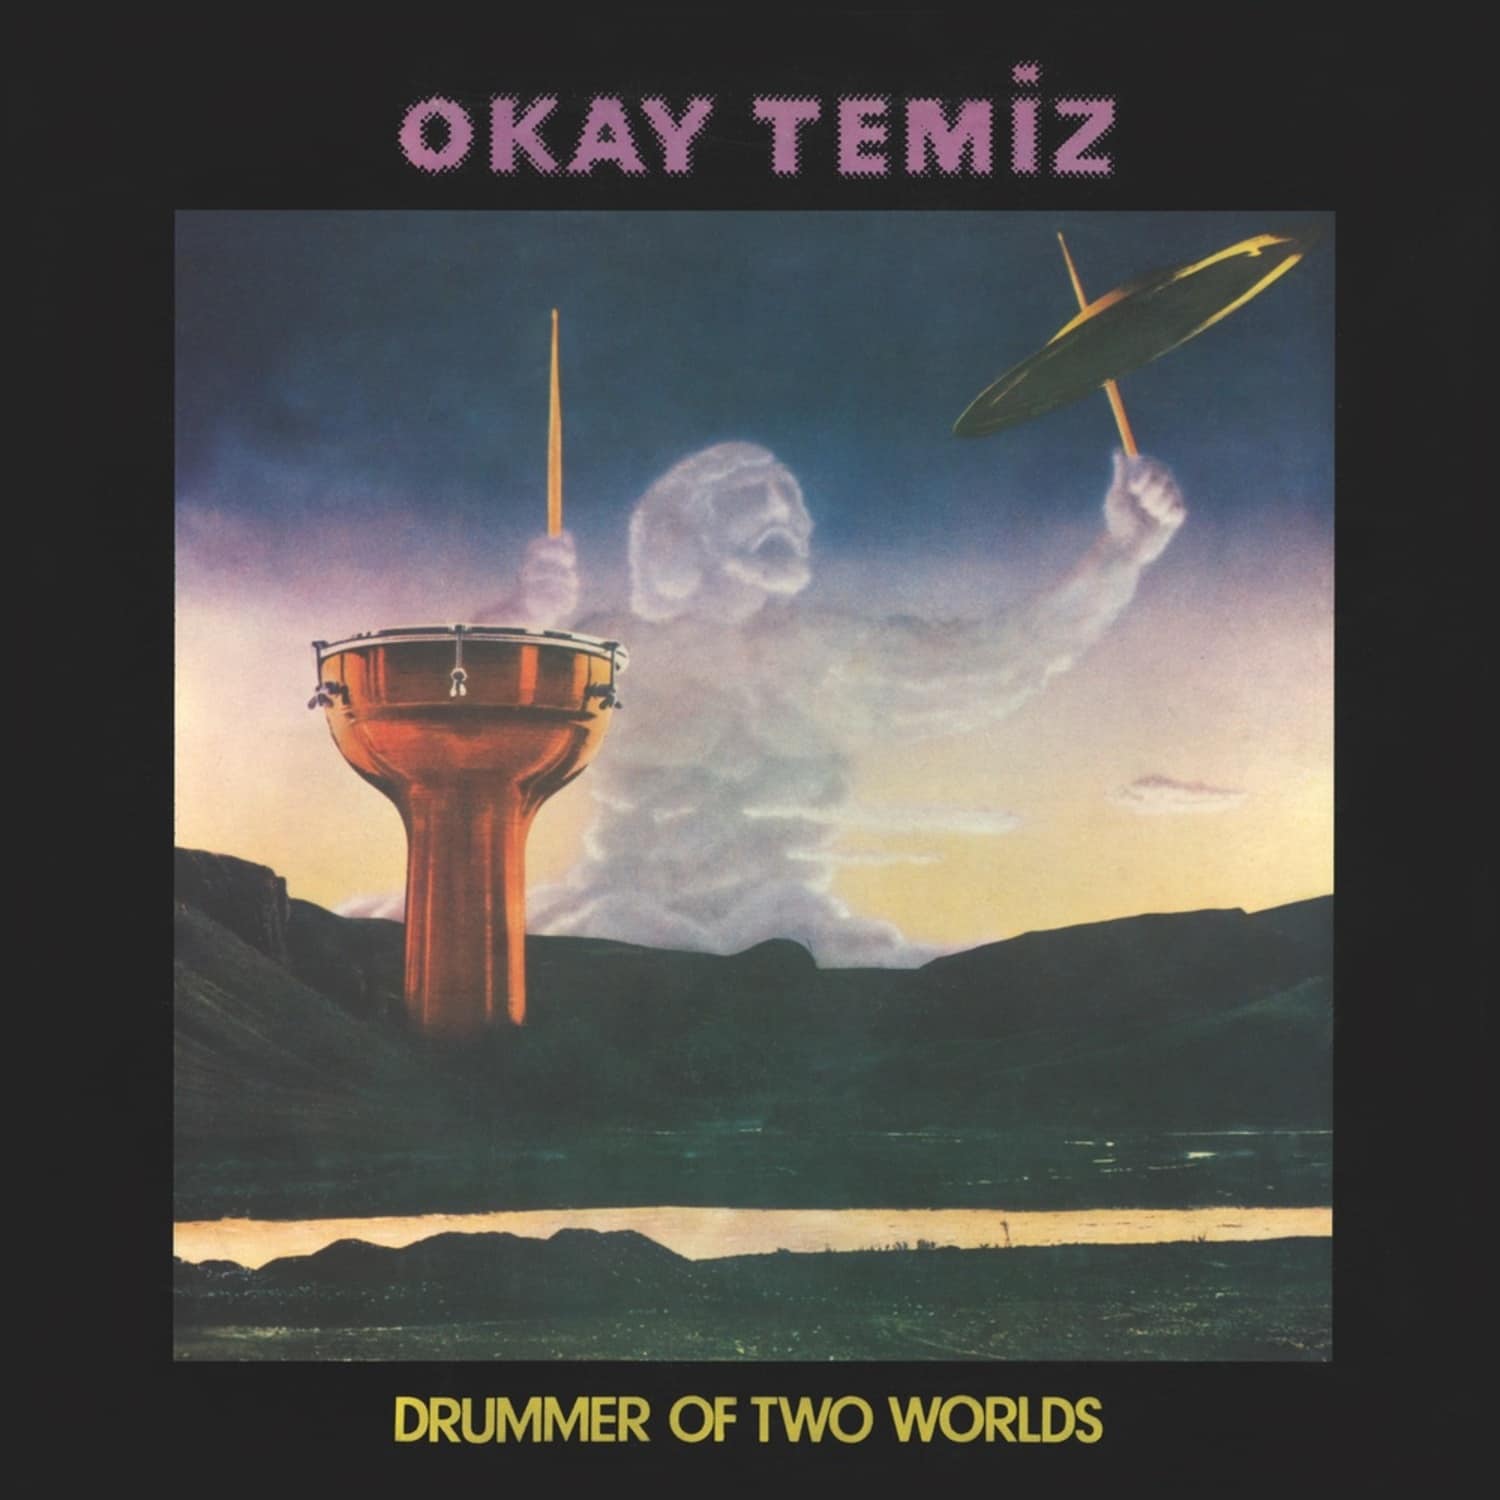 Okay Temiz - DRUMMER OF THE TWO WORLDS 